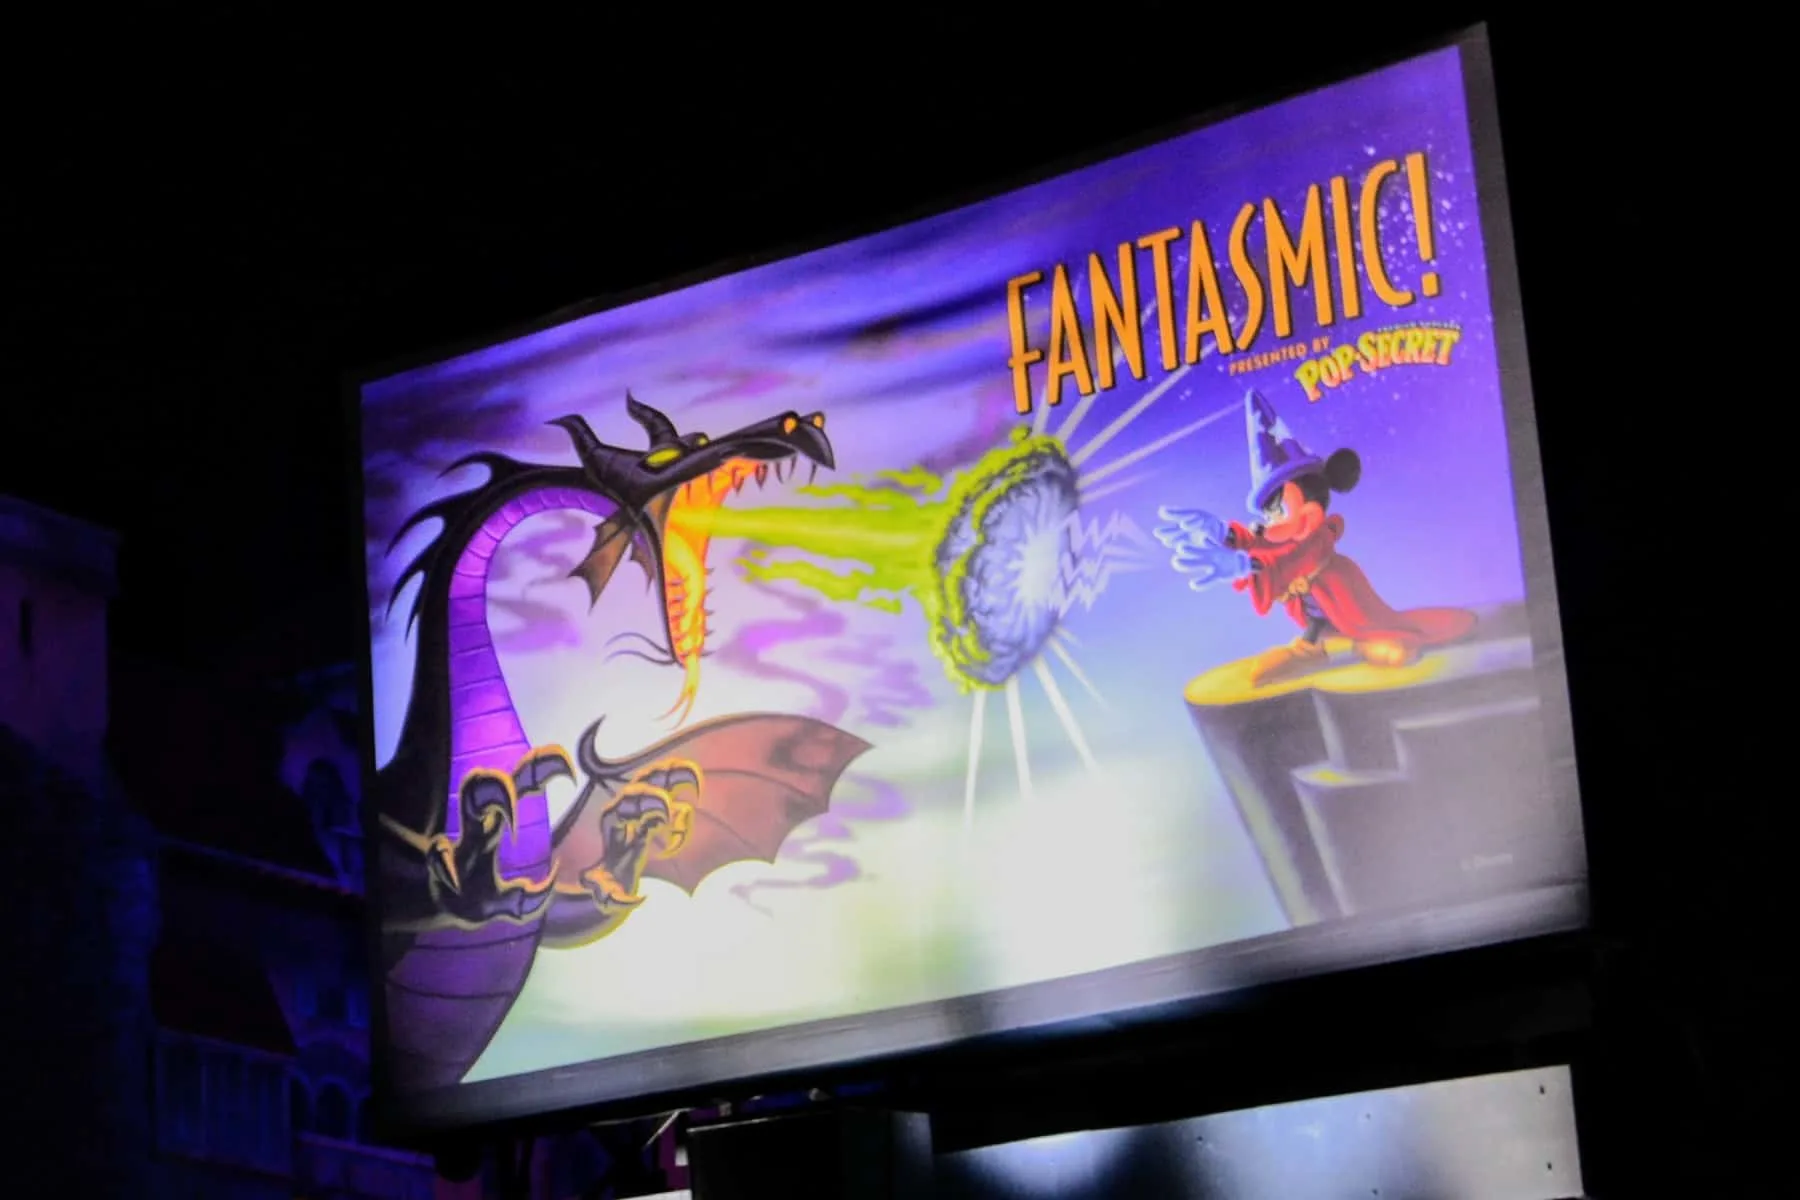 Fantasmic Returns to Hollywood Studios November 3